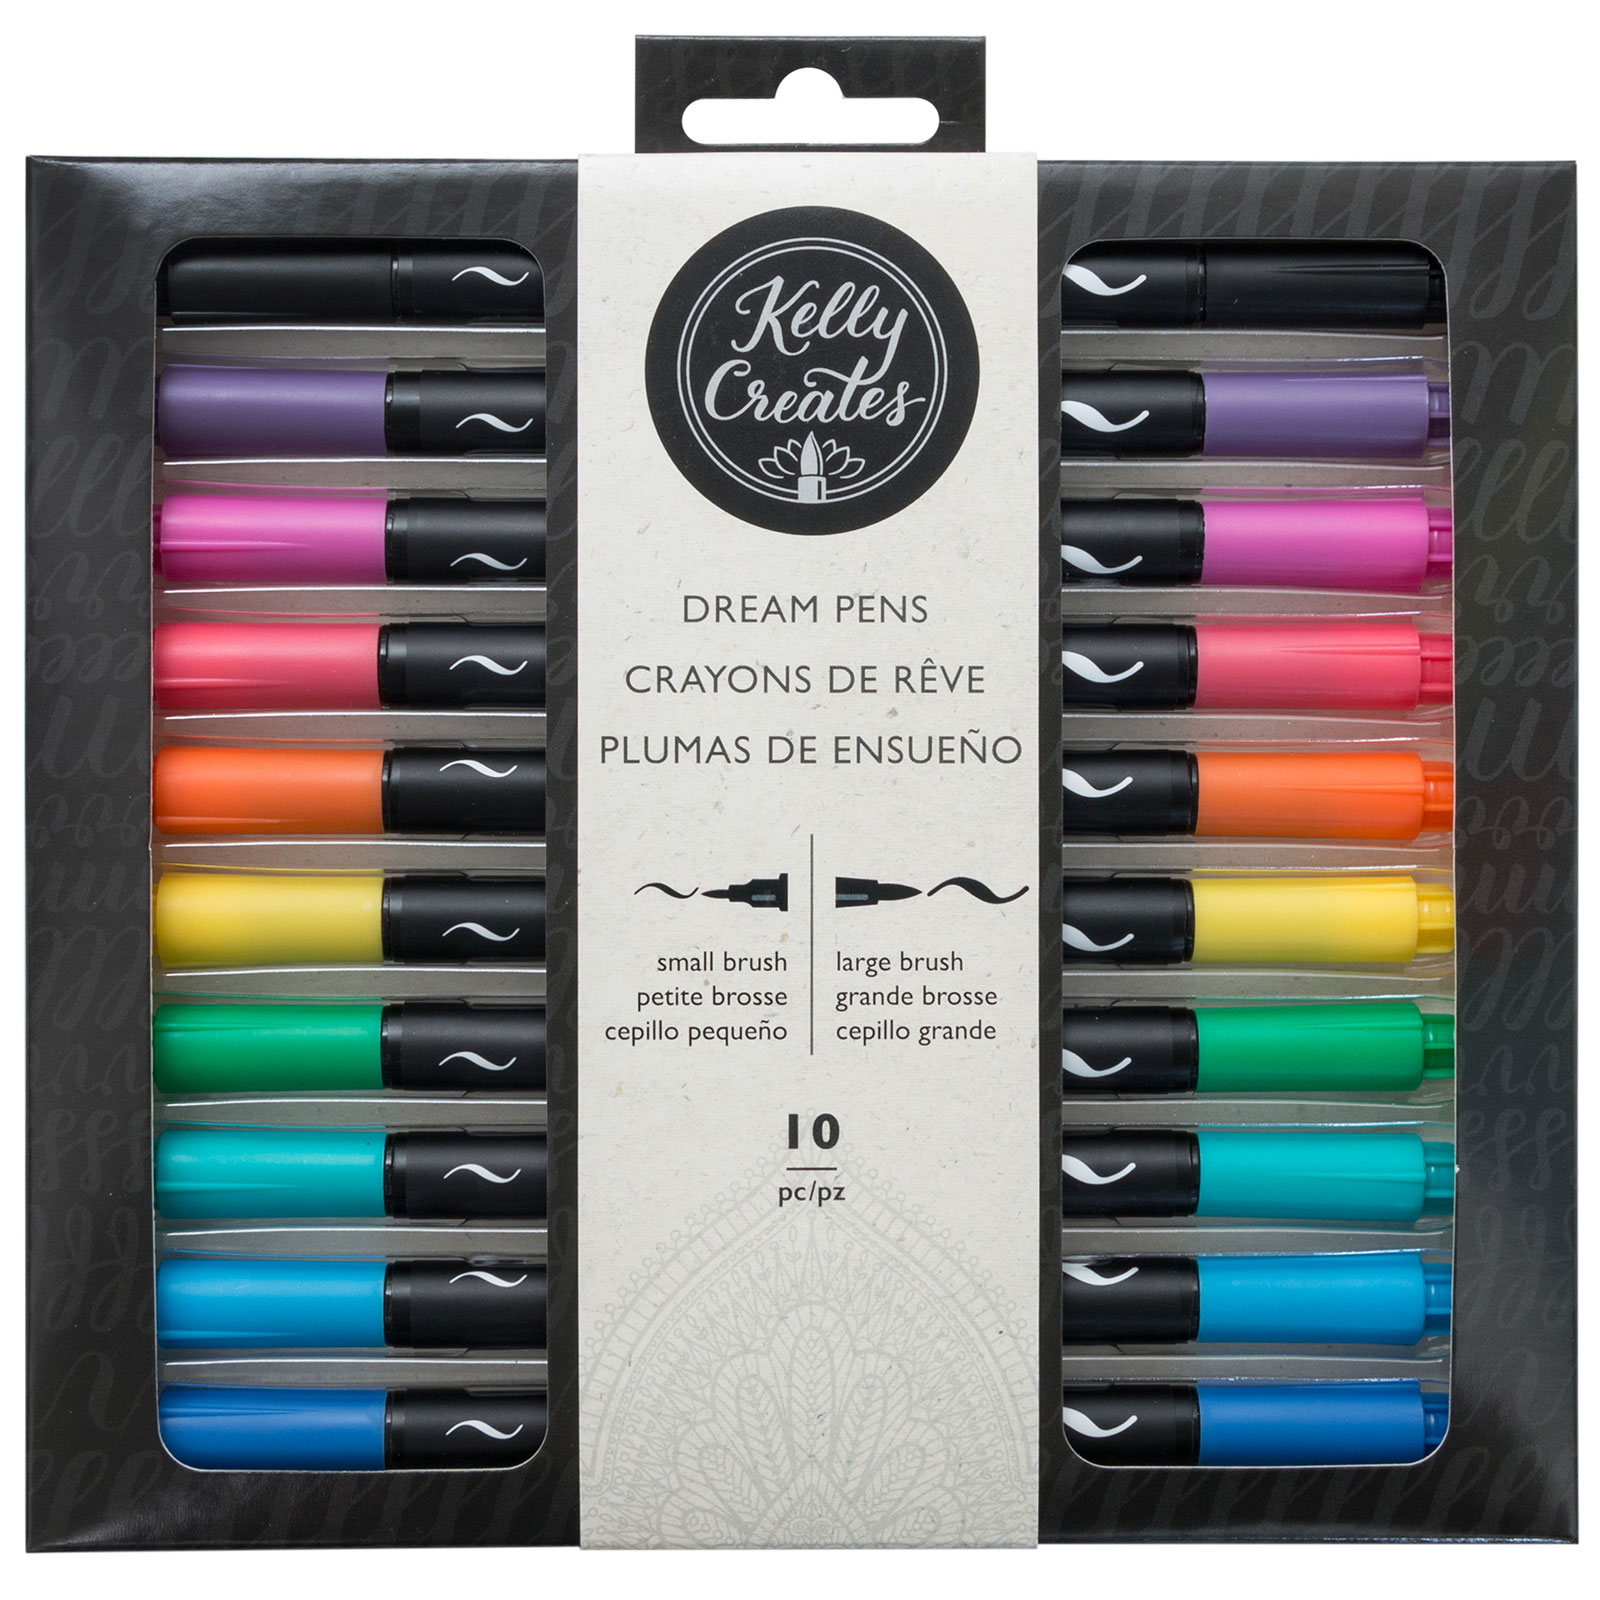 American Crafts Kelly Creates Dream Pens